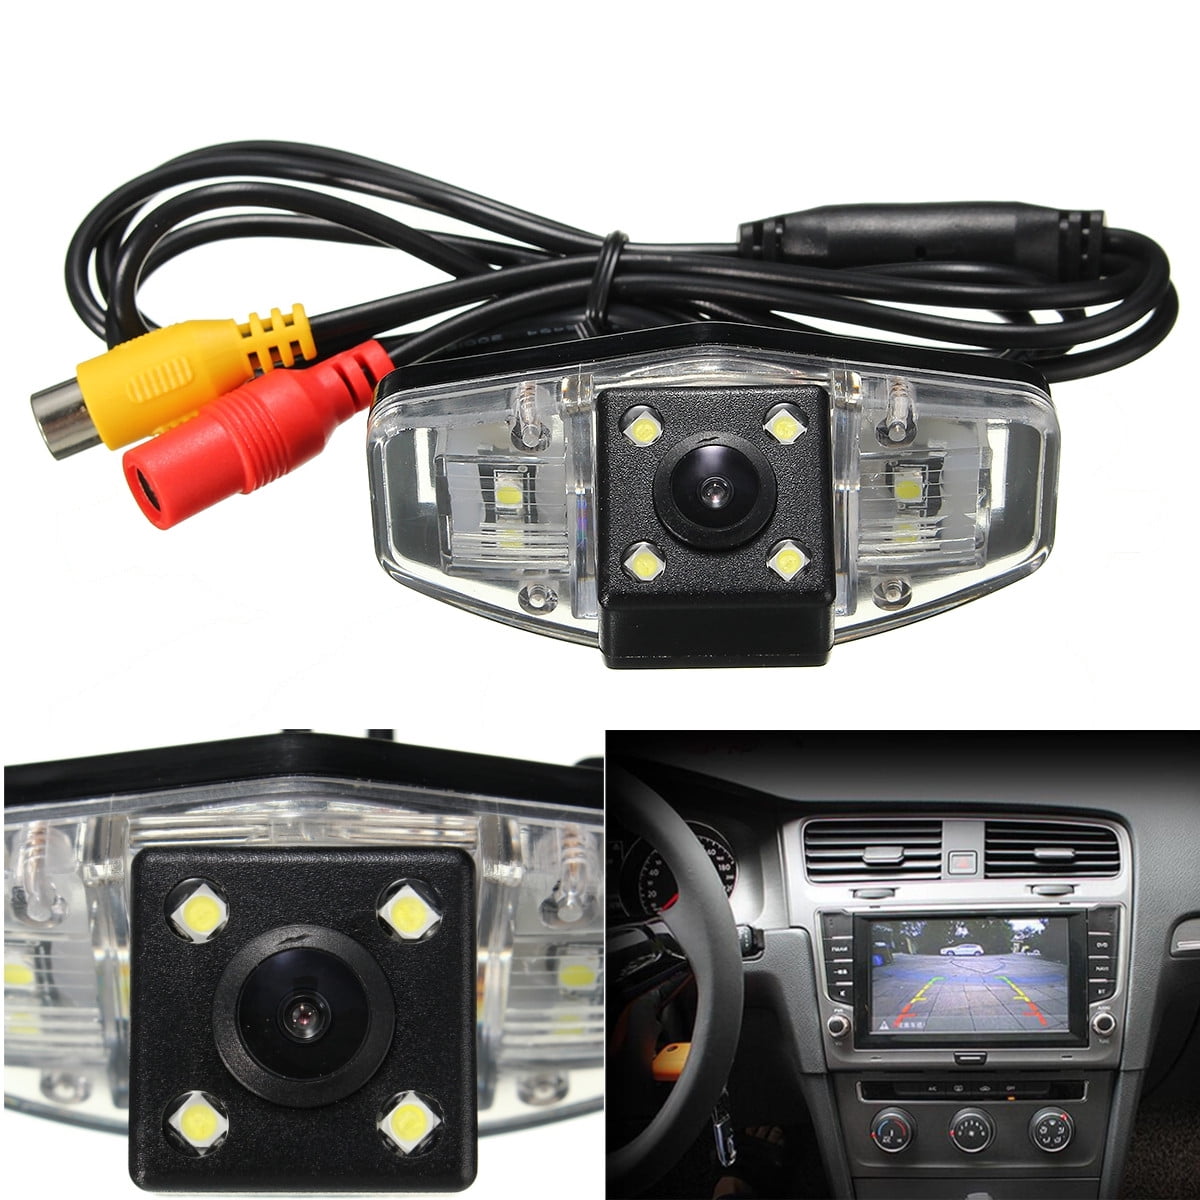 Honda CCD Reverse Camera with LEDs For Honda Accord Pilot Civic Acura 